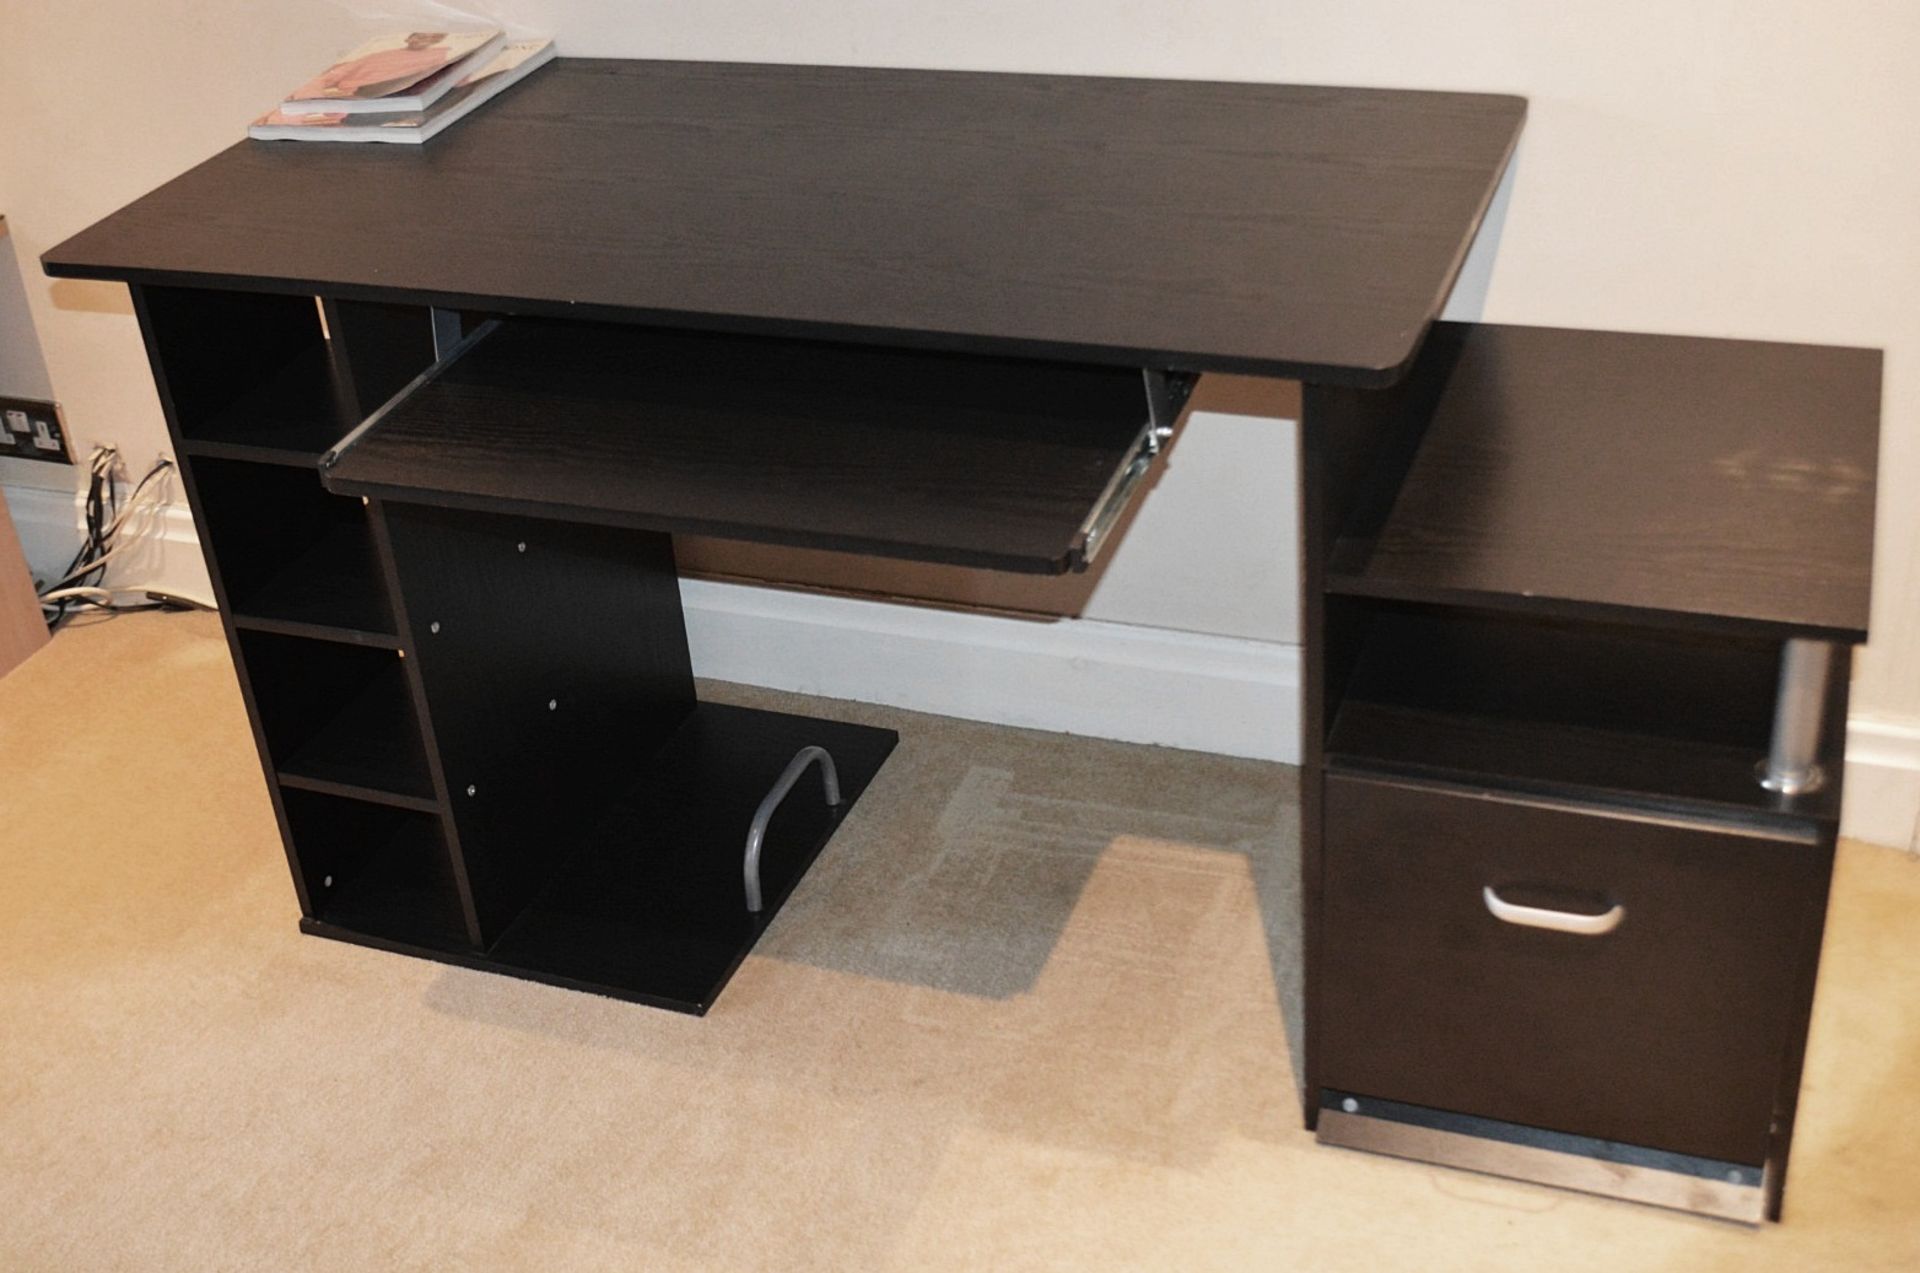 1 x Black Ash Desk With Slide-out Keyboard Shelf - Dimensions To Follow - NO VAT